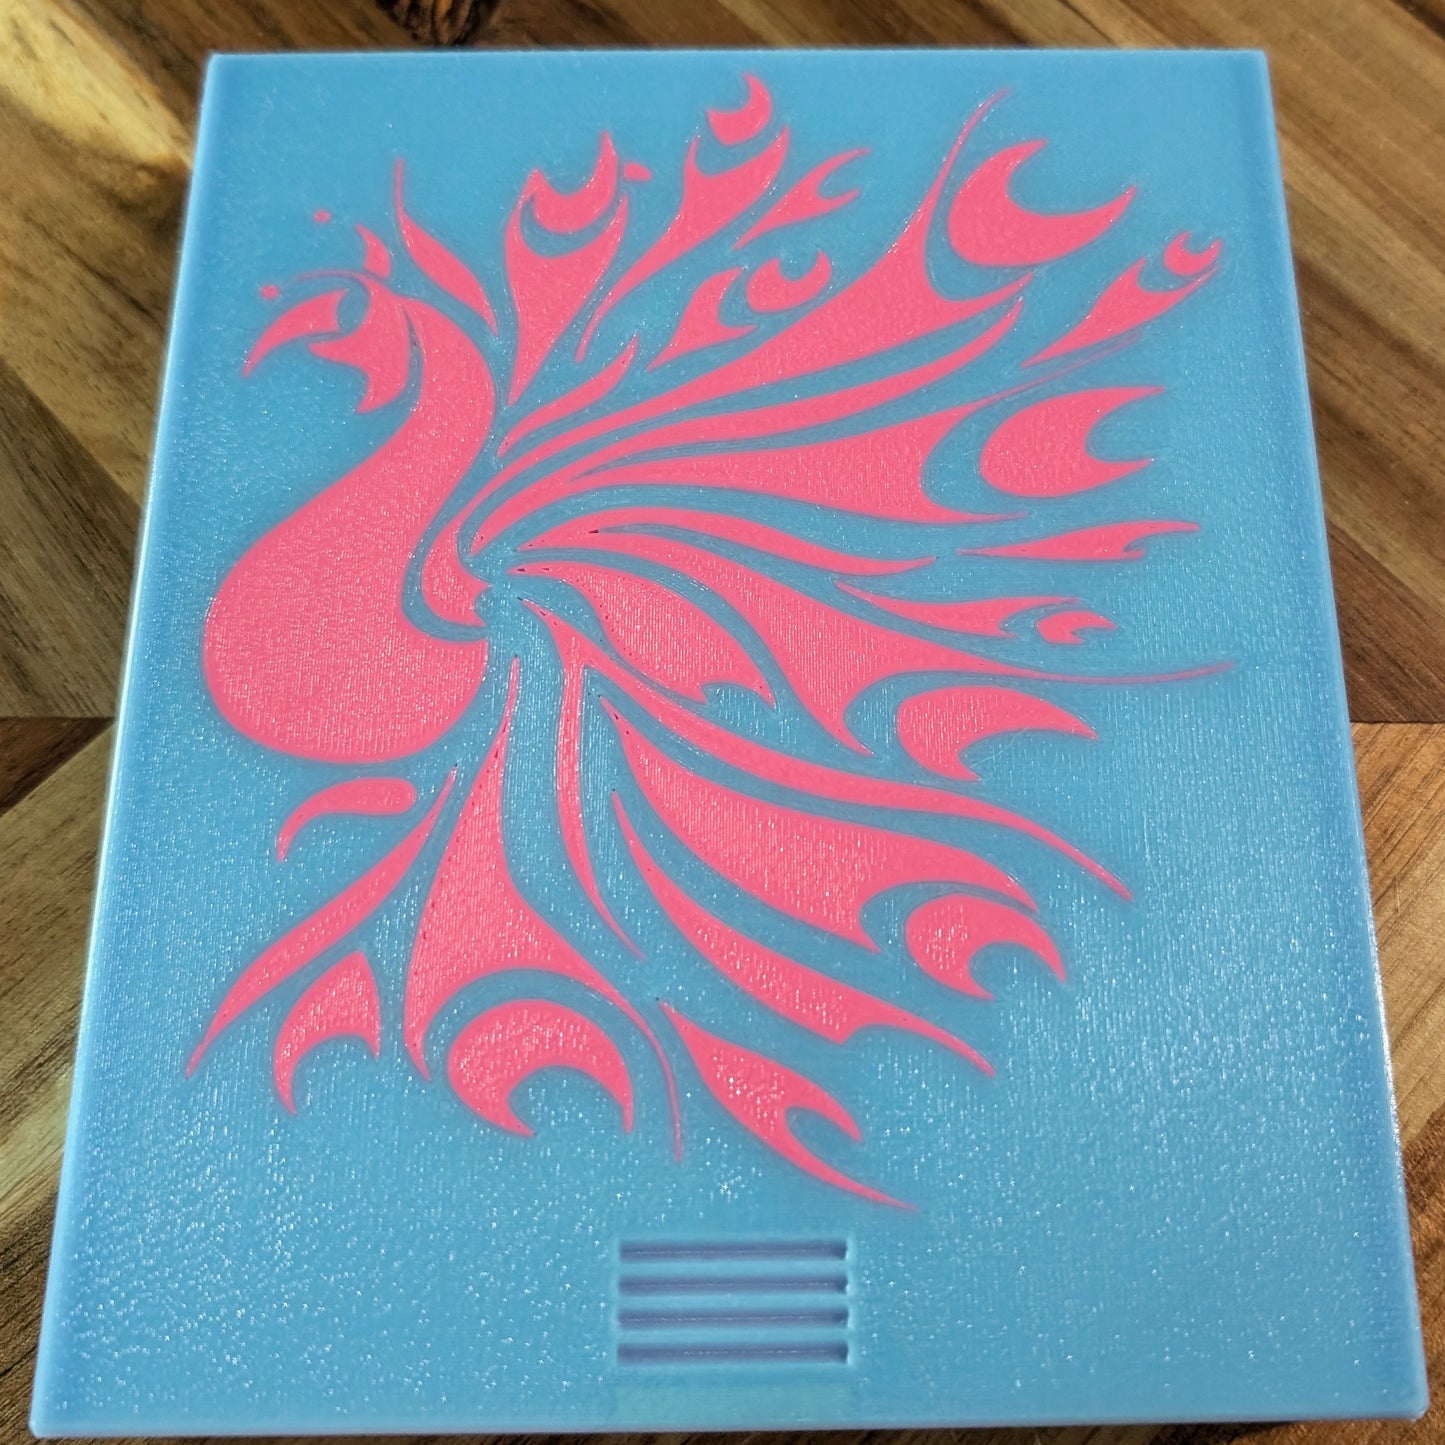 3D printed Notions Box--Peacock